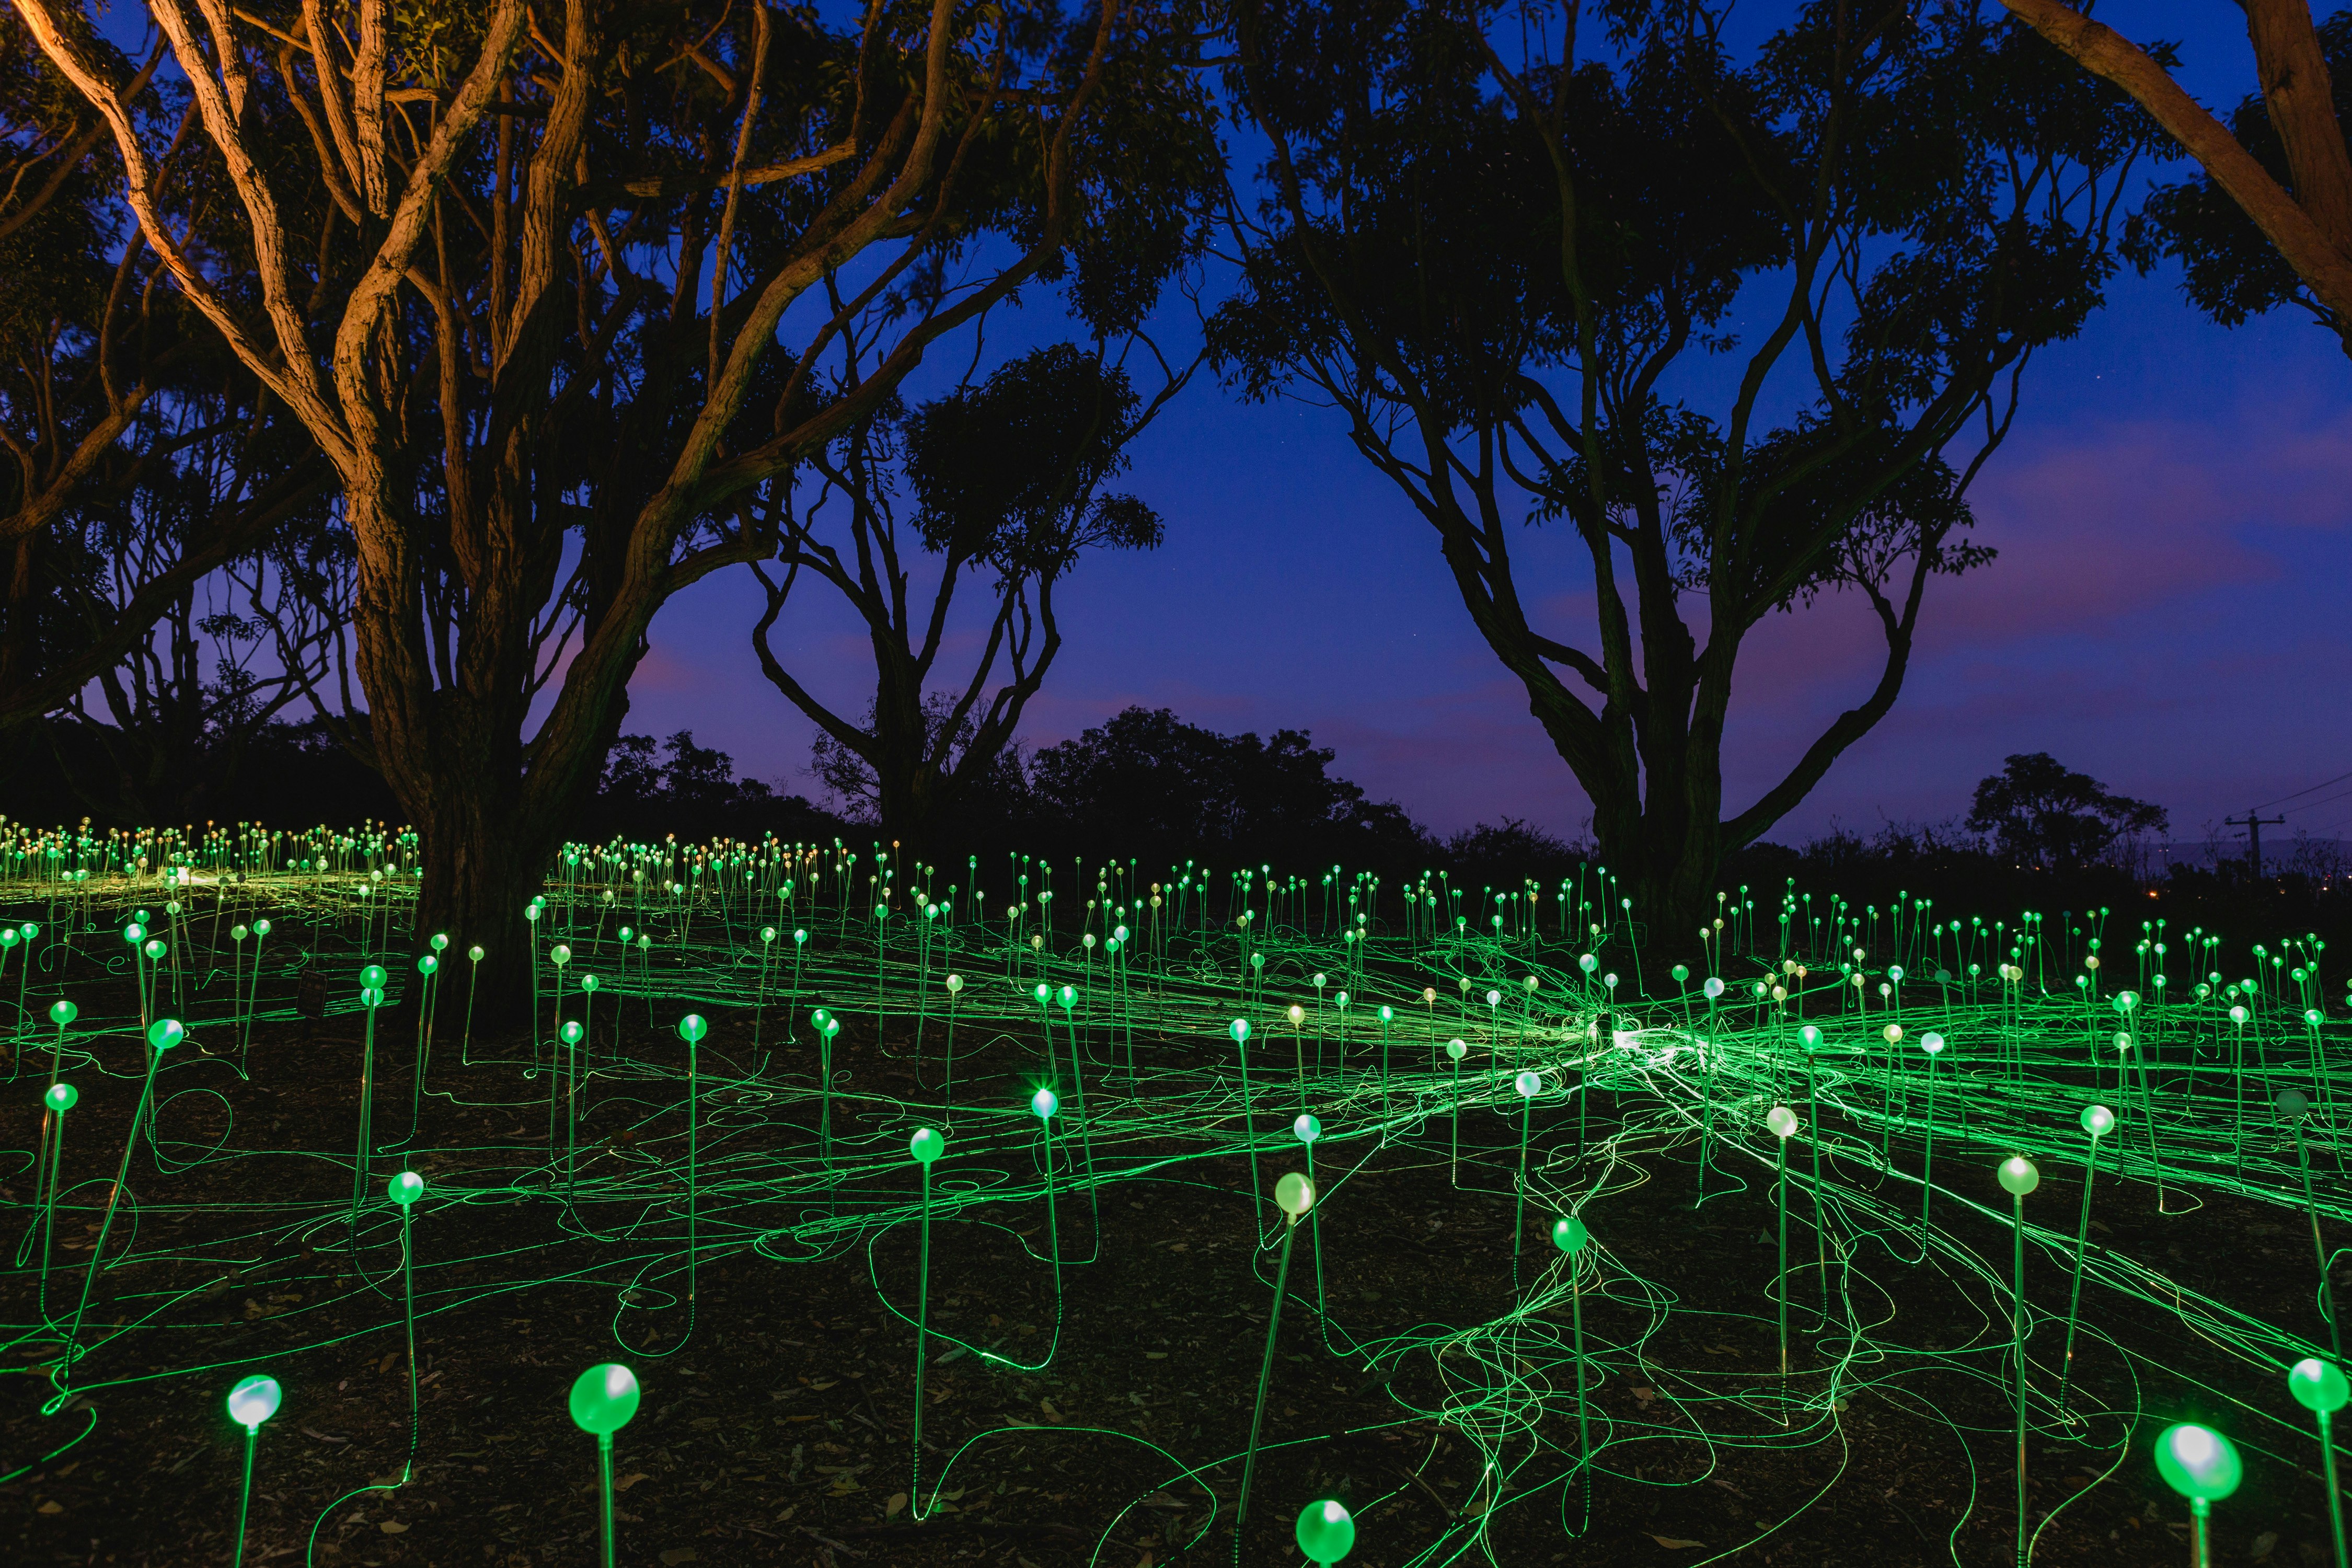 A tangle of neon-green lights surrounding three trees under a dark night sky